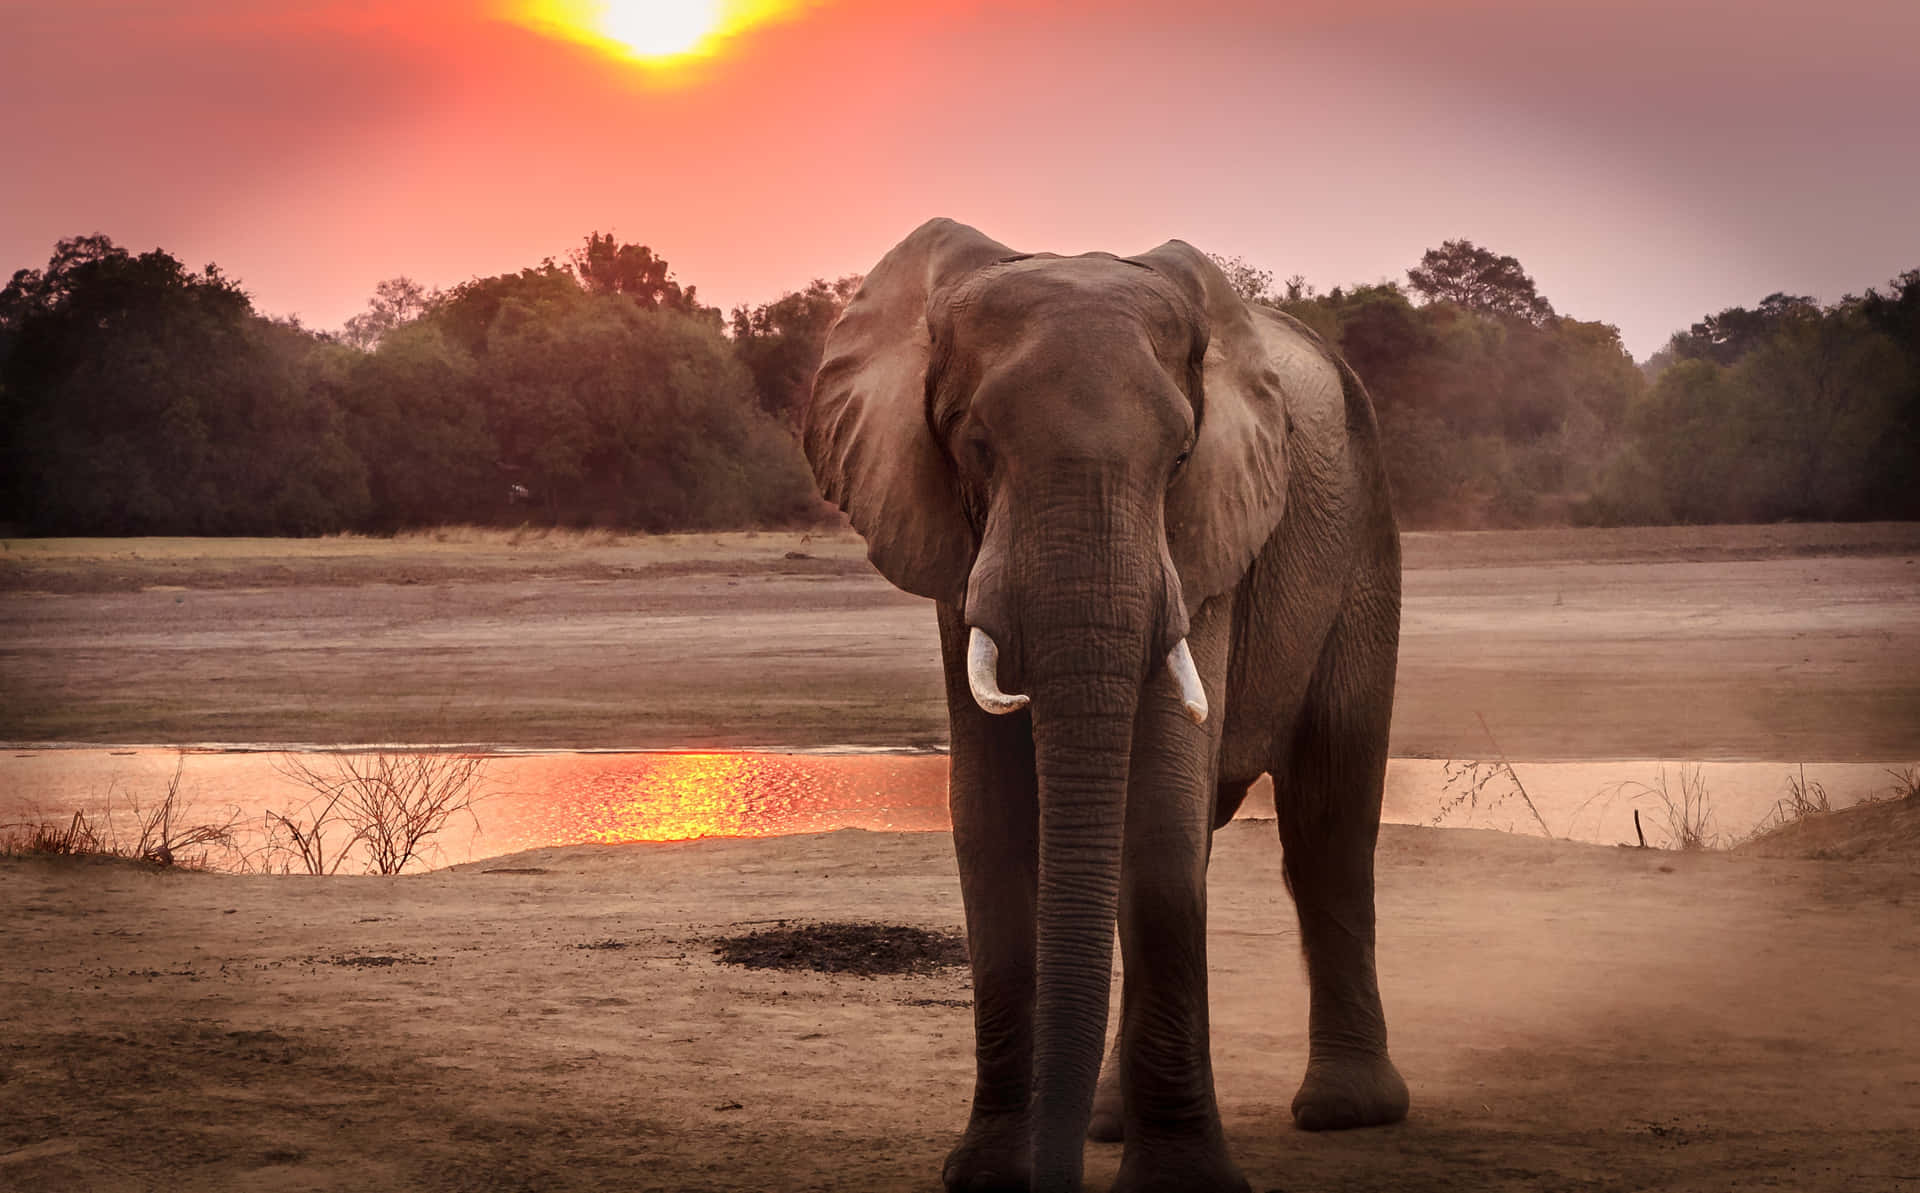 A majestic elephant standing amongst the grass